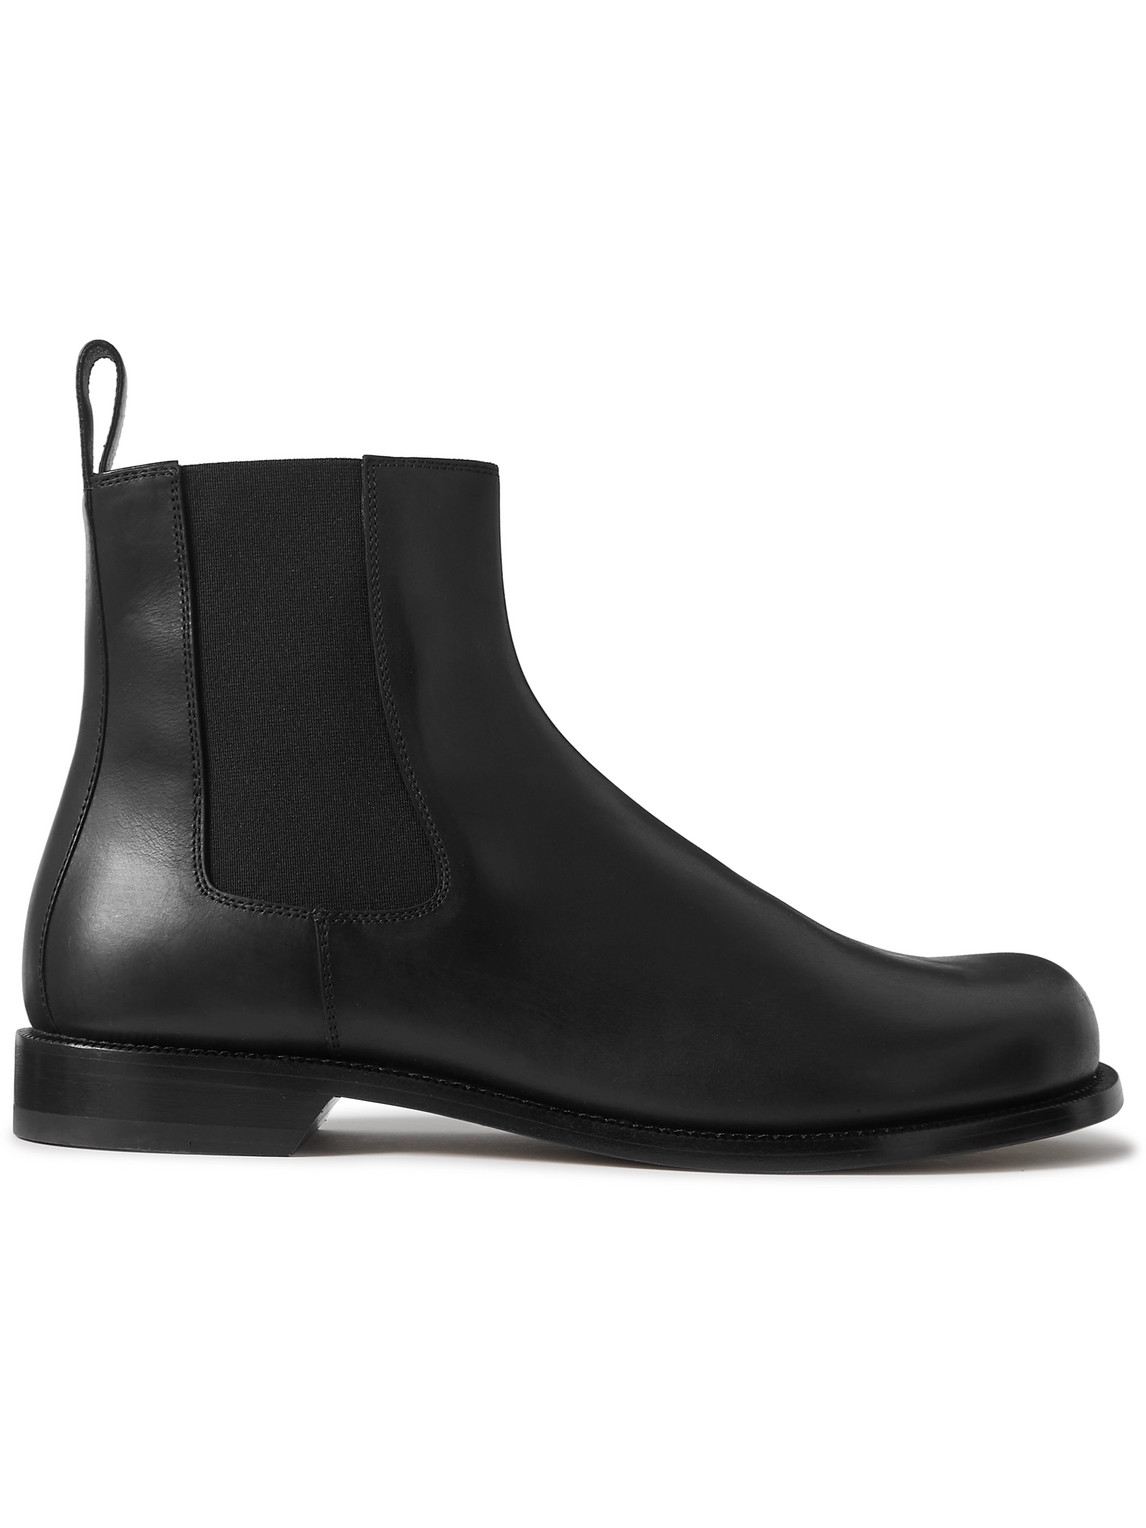 LOEWE - Campo Leather Chelsea Boots - Men - Black - EU 46 von LOEWE